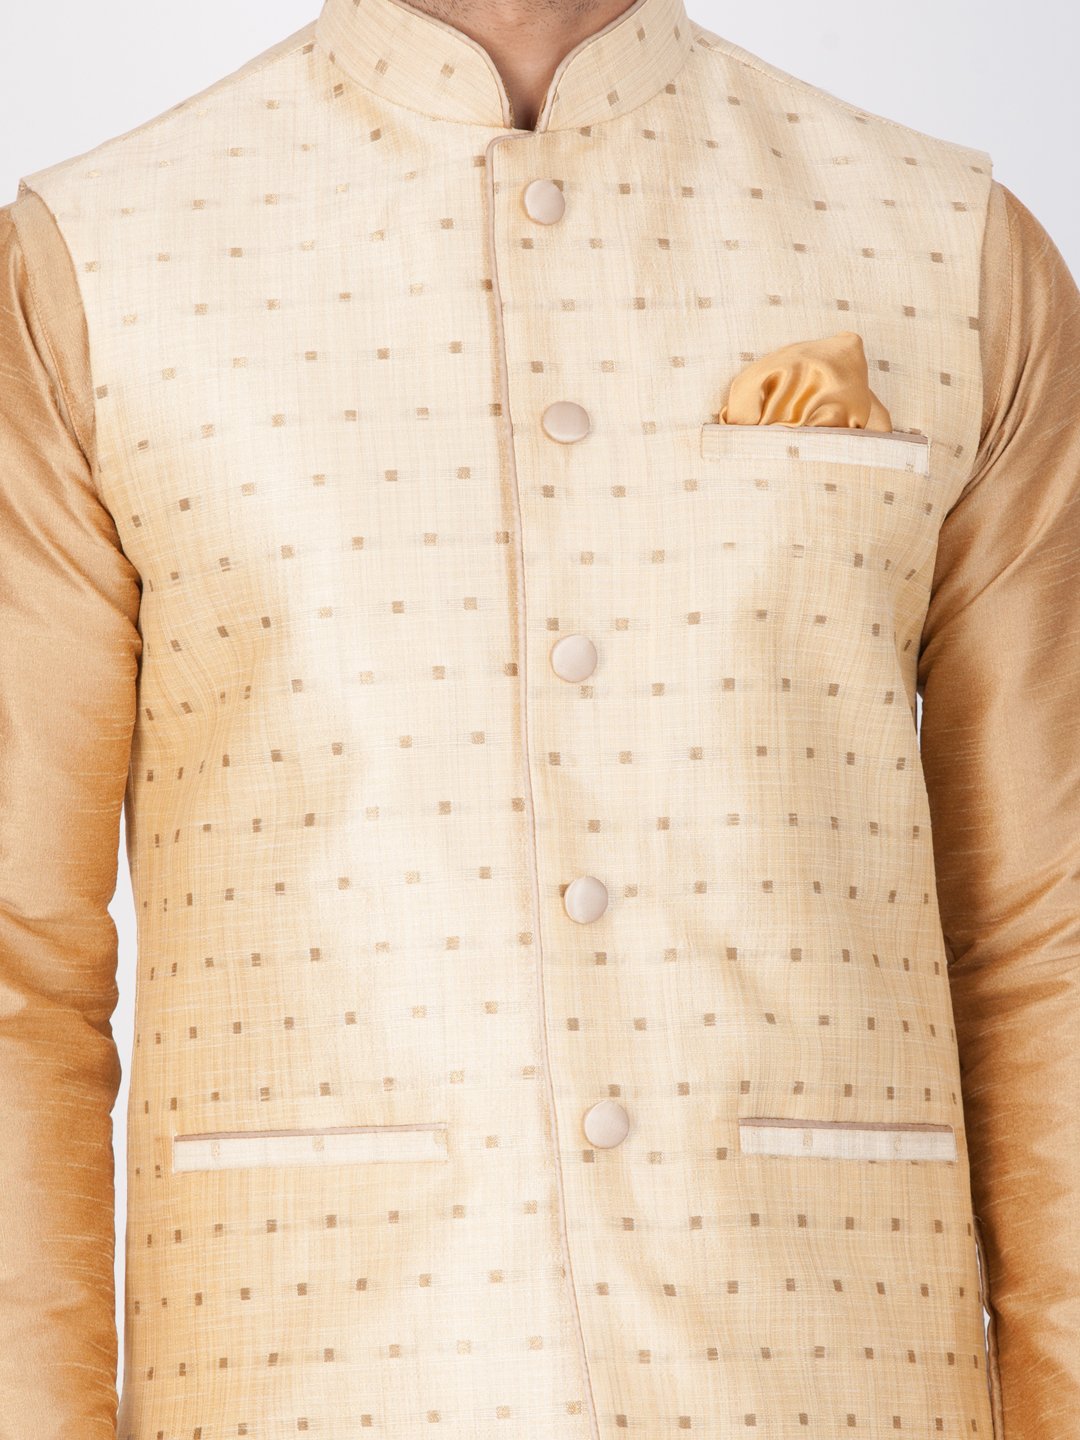 Men's Gold Cotton Blend Ethnic Jacket - Vastramay